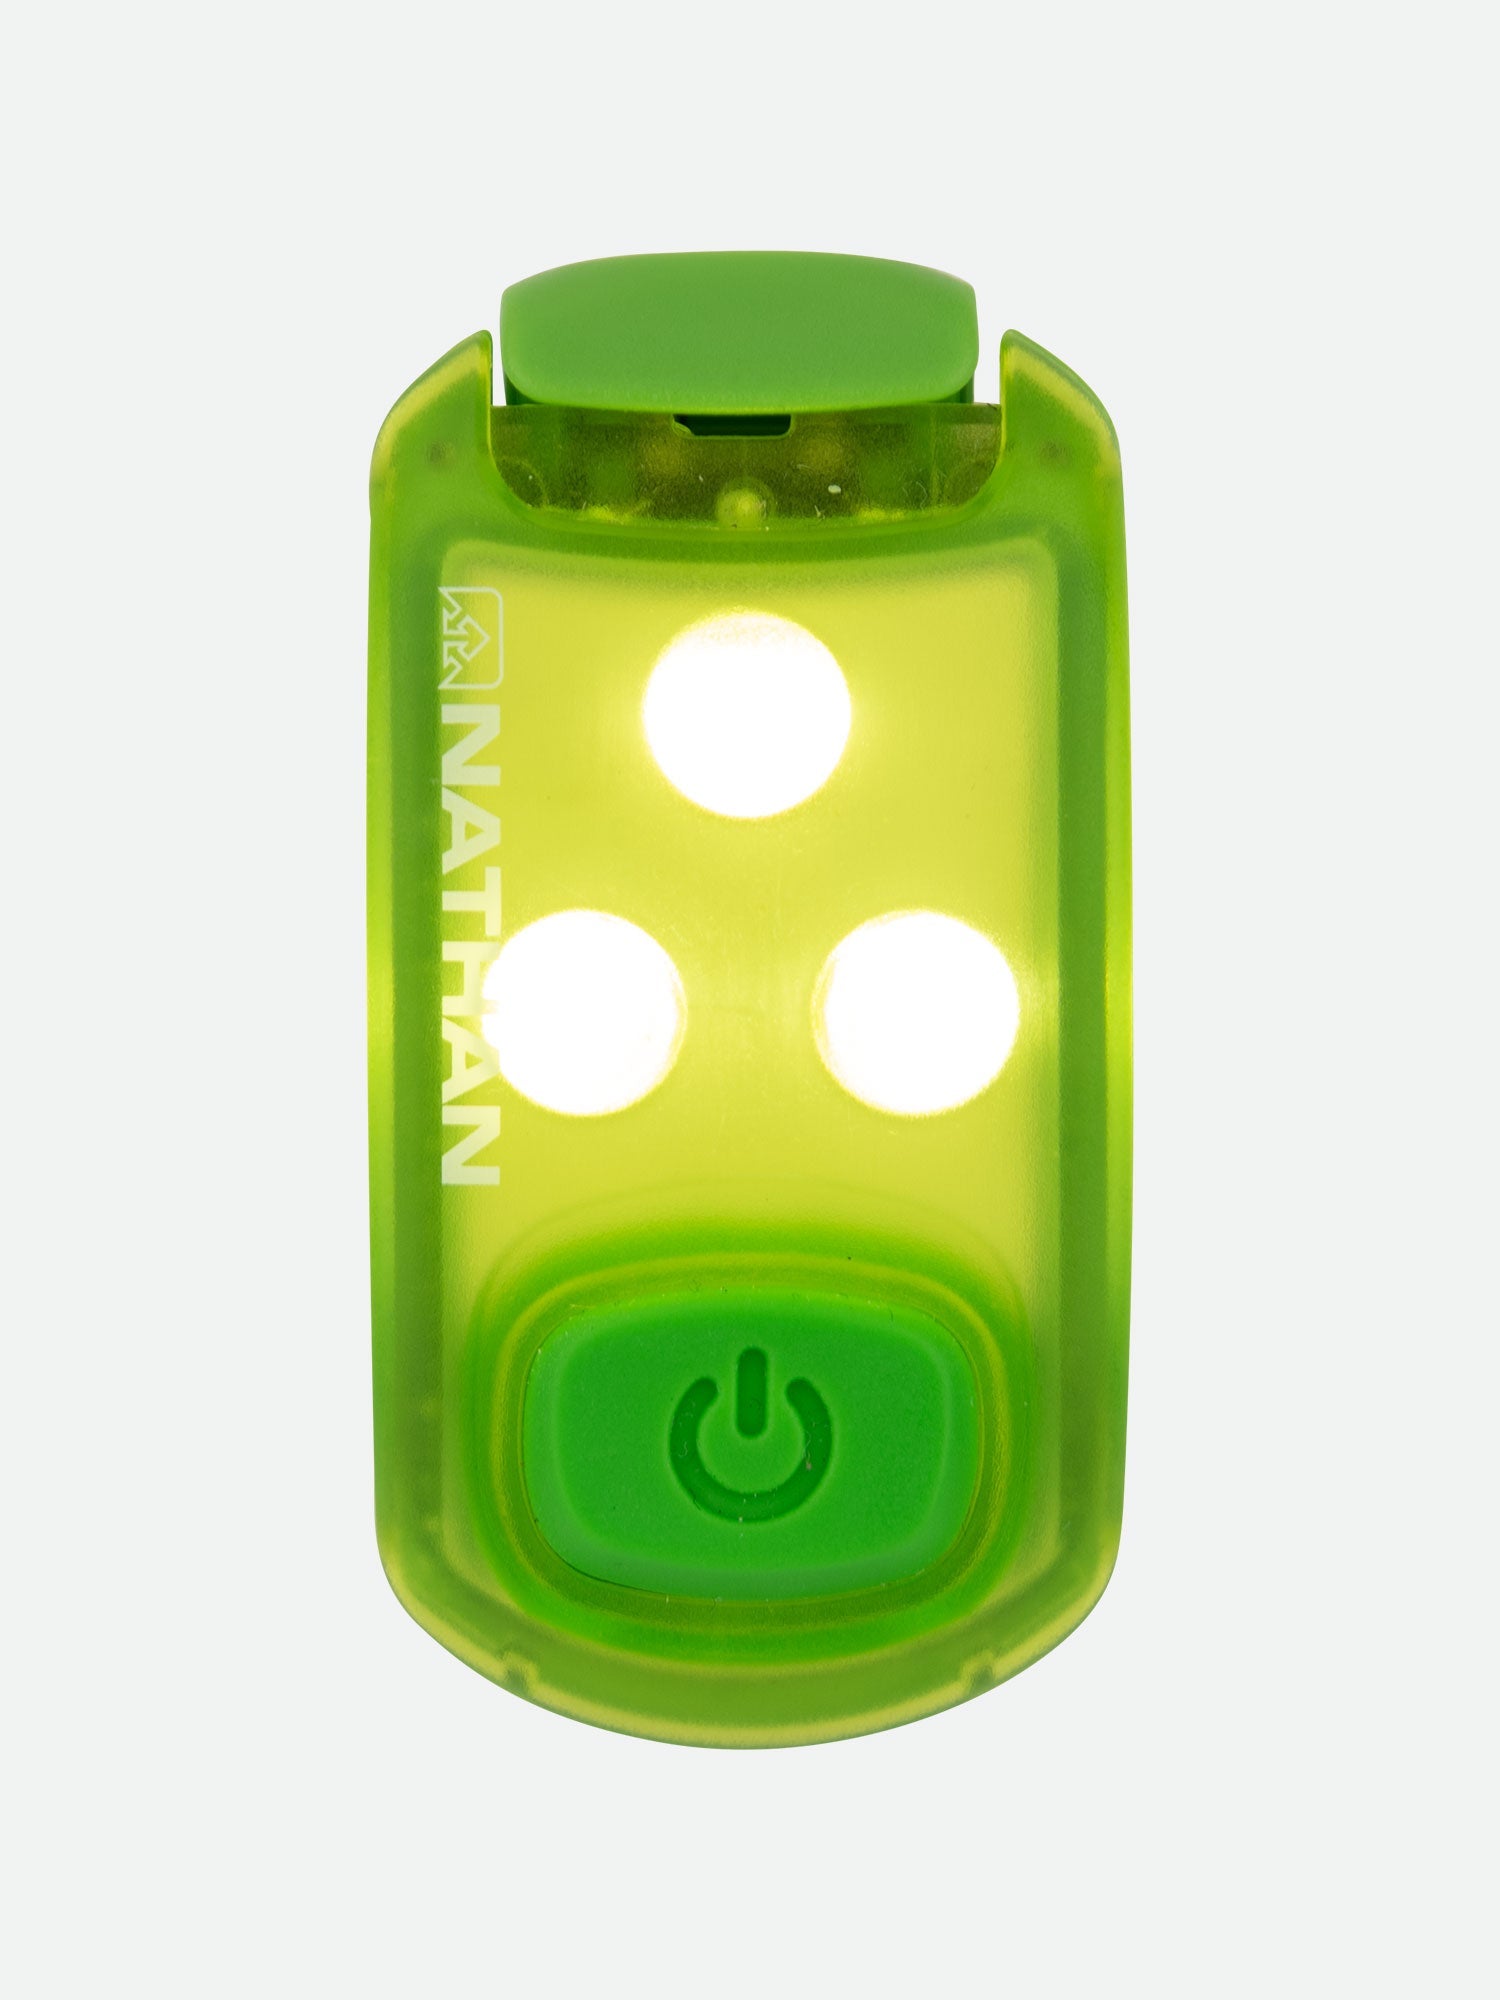 Nathan Hyperbite RX Strobe Rechargeable LED Clip Light - Bauman's Running &  Walking Shop